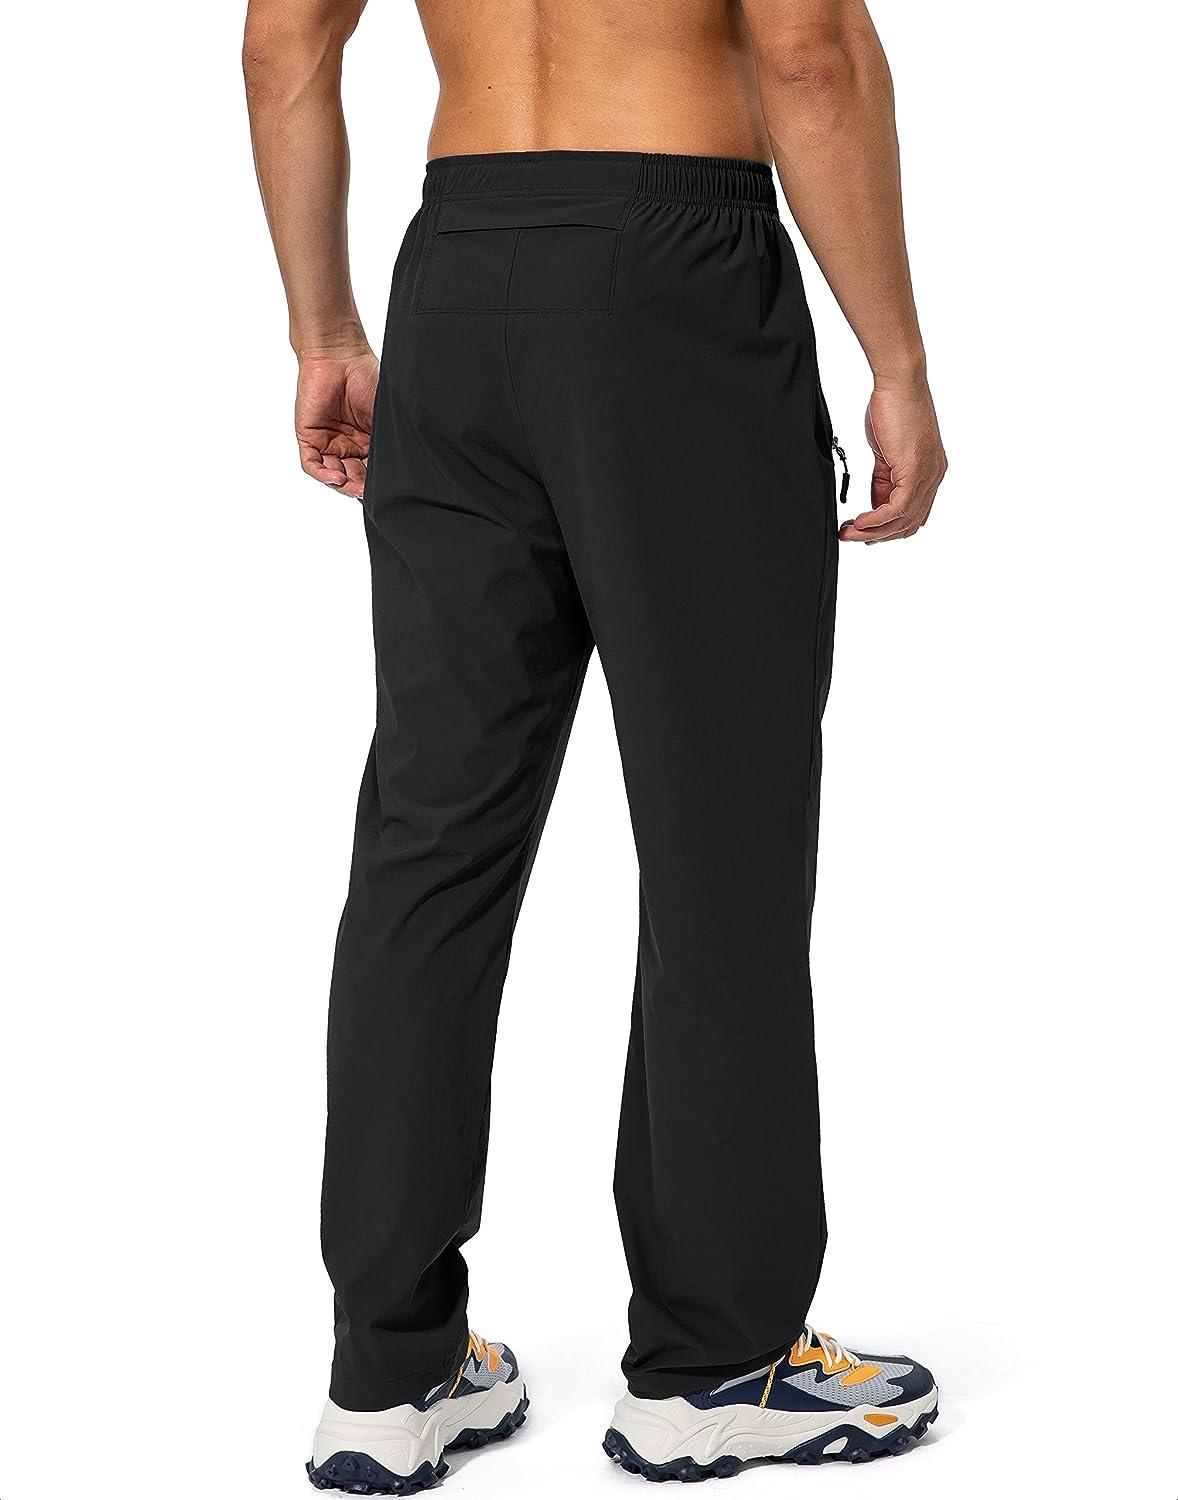 Pudolla Men's Workout Athletic Pants Elastic Waist Jogging Running Pants  for Men with Zipper Pockets Black Large